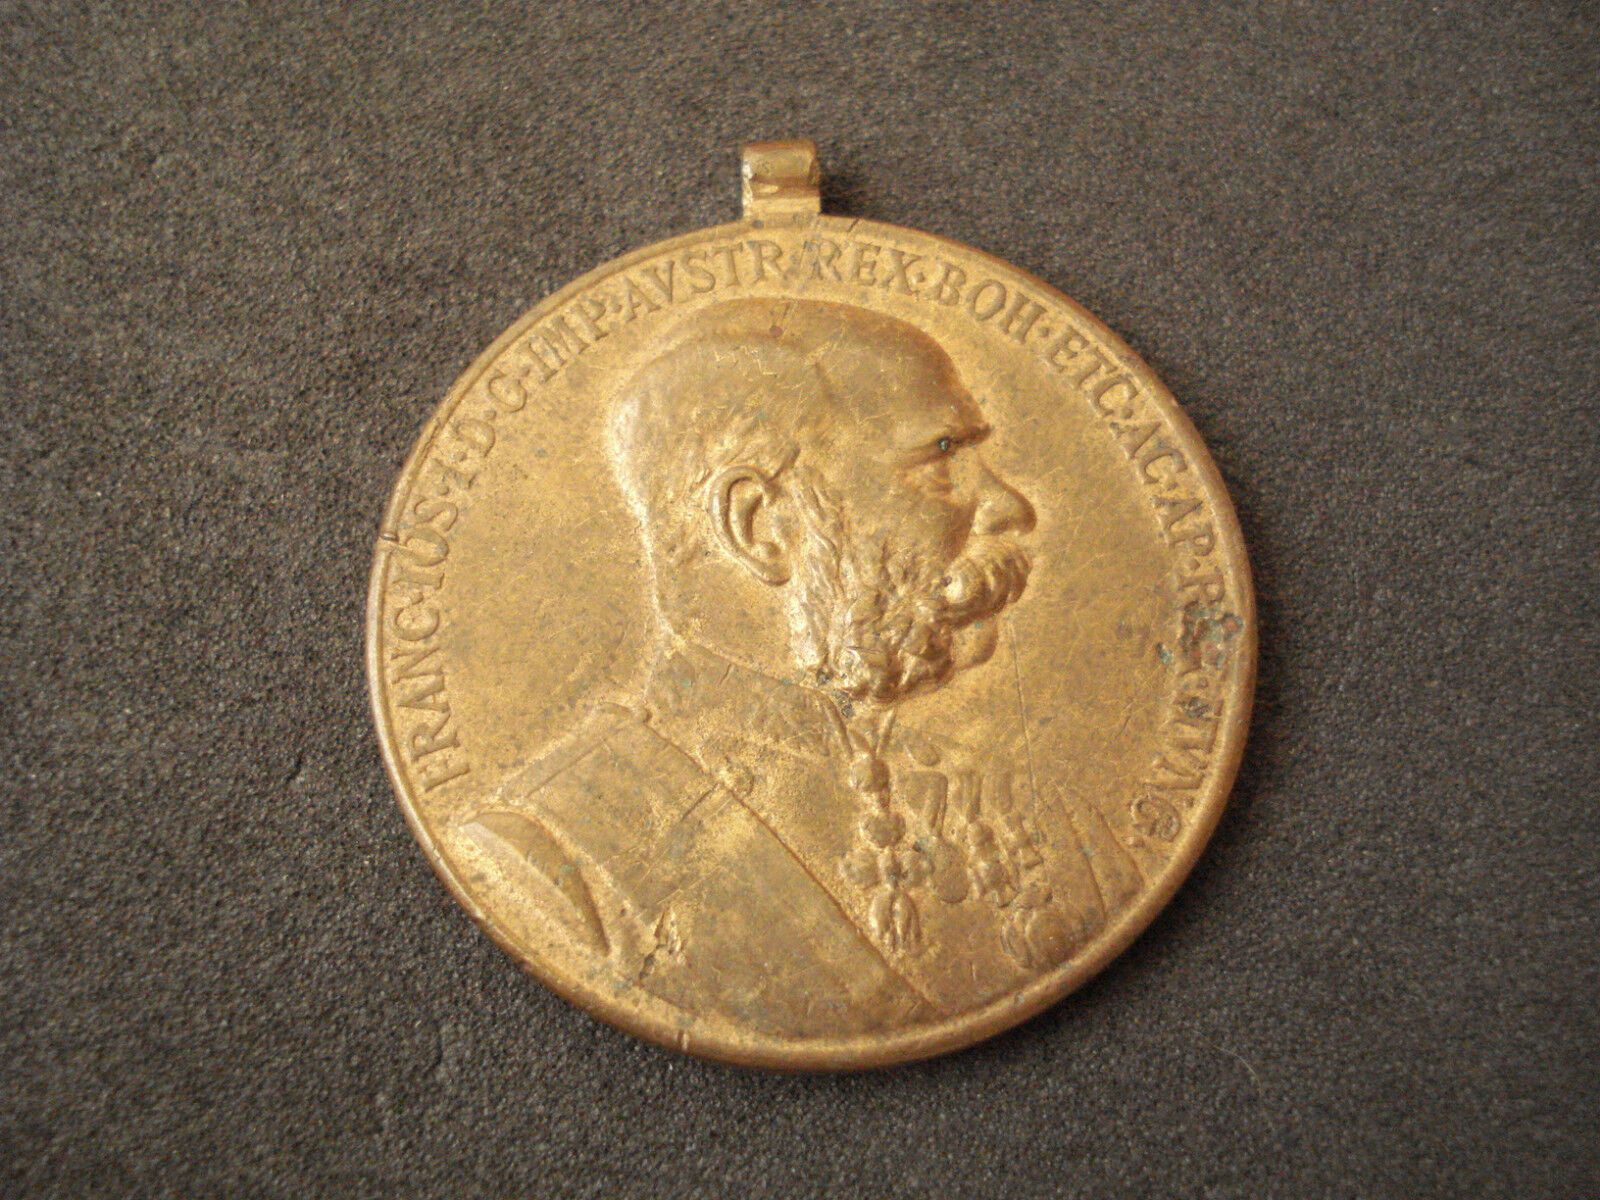 Austria - Hungary, Signum Memoriae Jubilee medal, 1898, Franz Joseph